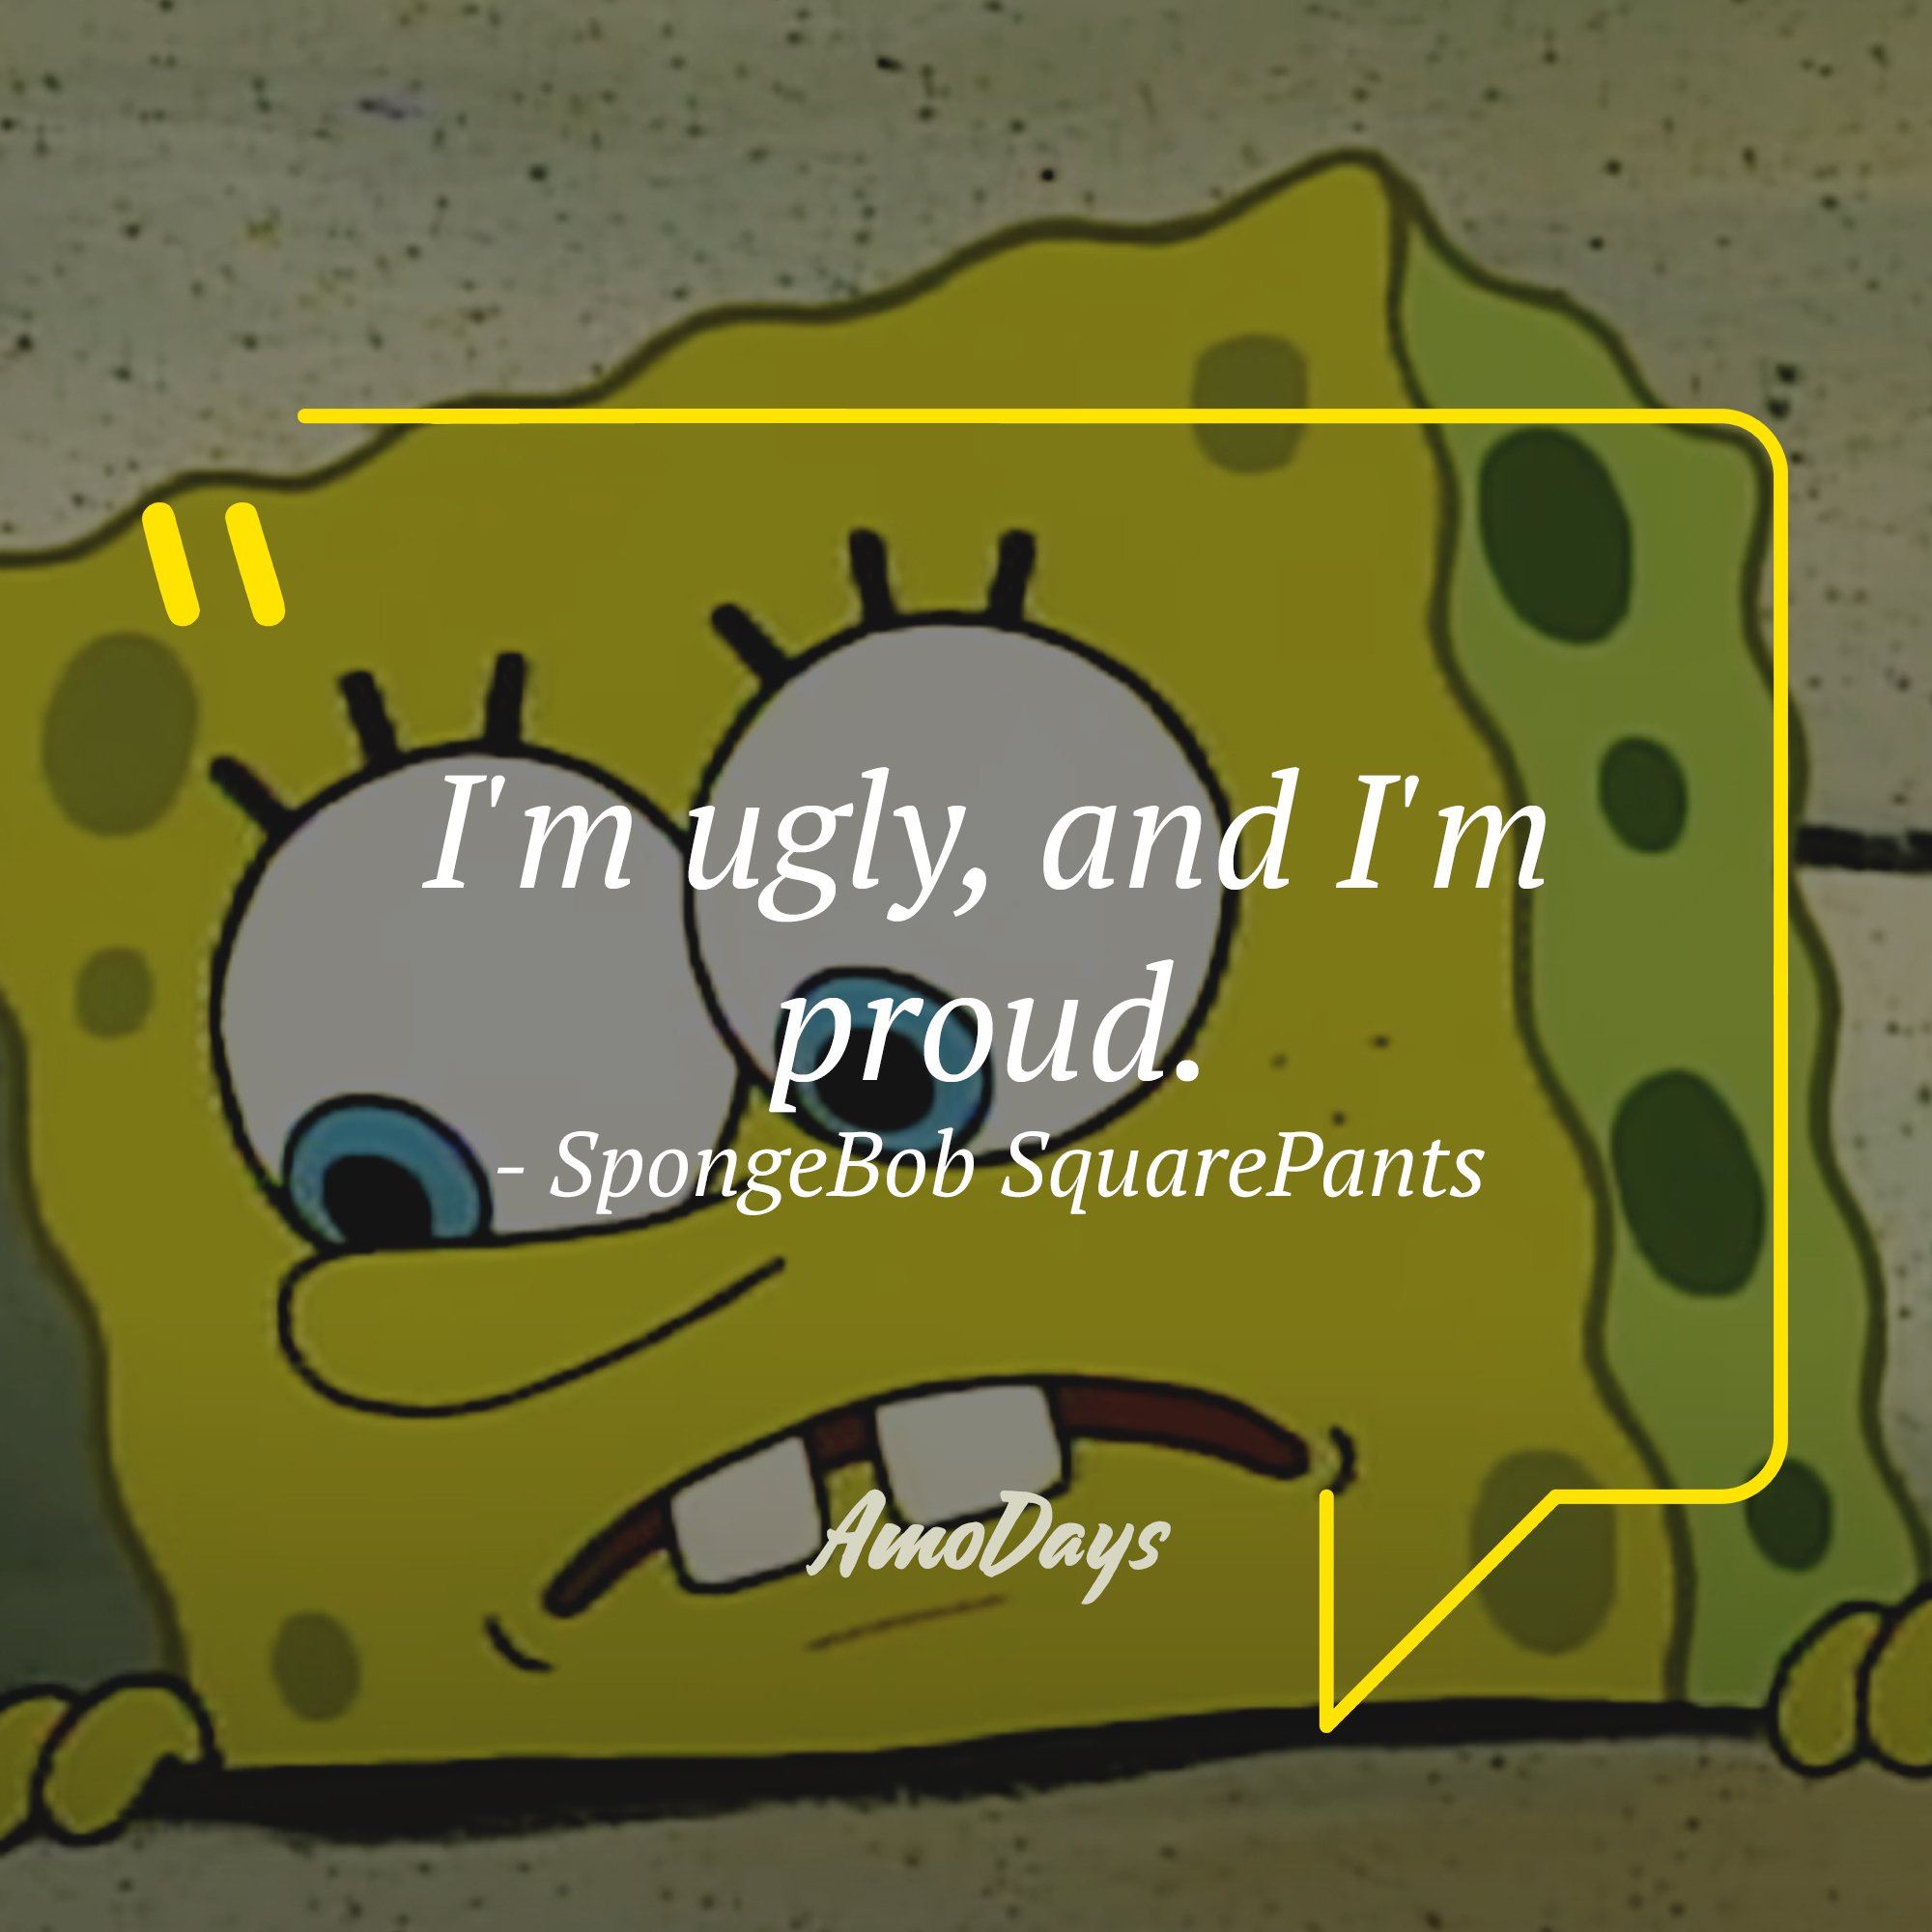  SpongeBob SquarePants's quote: "I'm ugly, and I'm proud." | Source: AmoDays